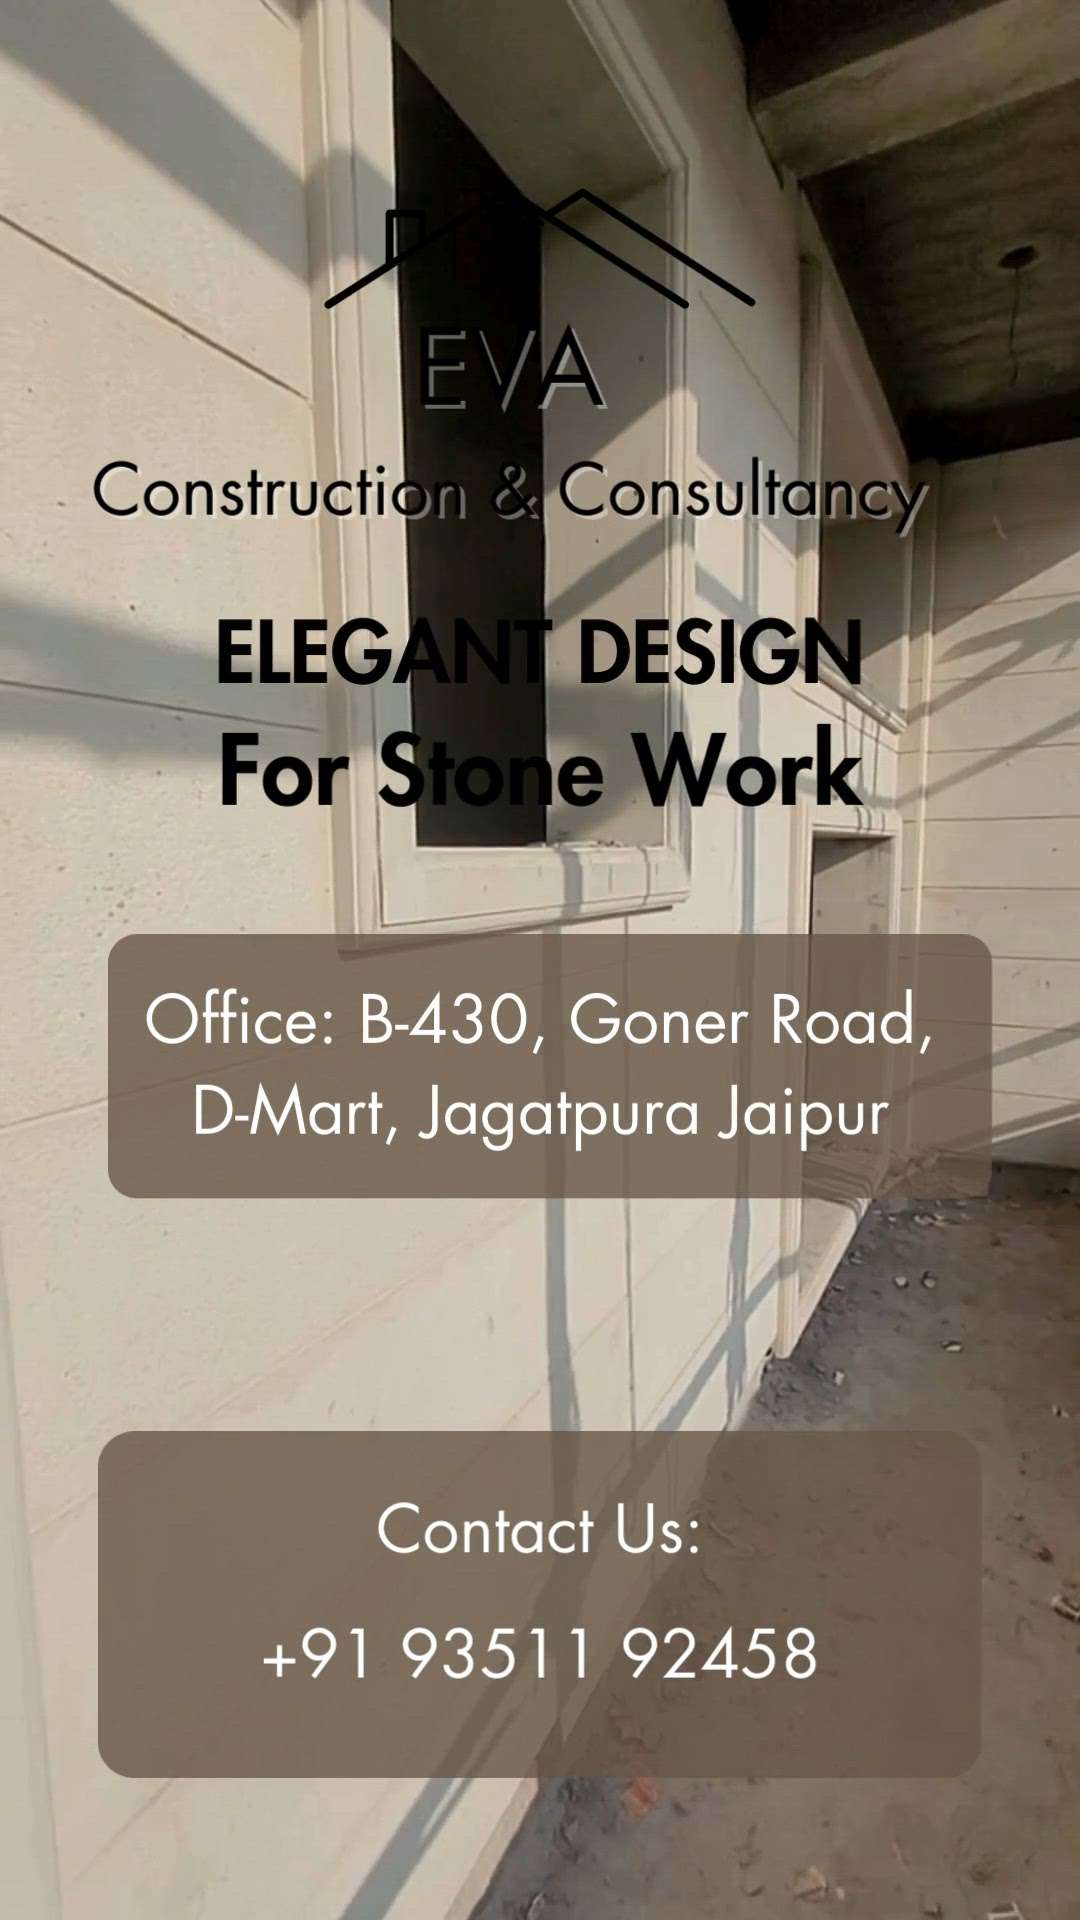 !! Elegant Stone Work !!
Contact: 
EVA Construction & Consultancy 

9351192458
8079032499

B-430, Goner Road, Opposite D-Mart, Jagatpura, Jaipur

#HouseConstruction #architecturedesigns 
#Architectural&Interior 
#jaipur
#jagatpura